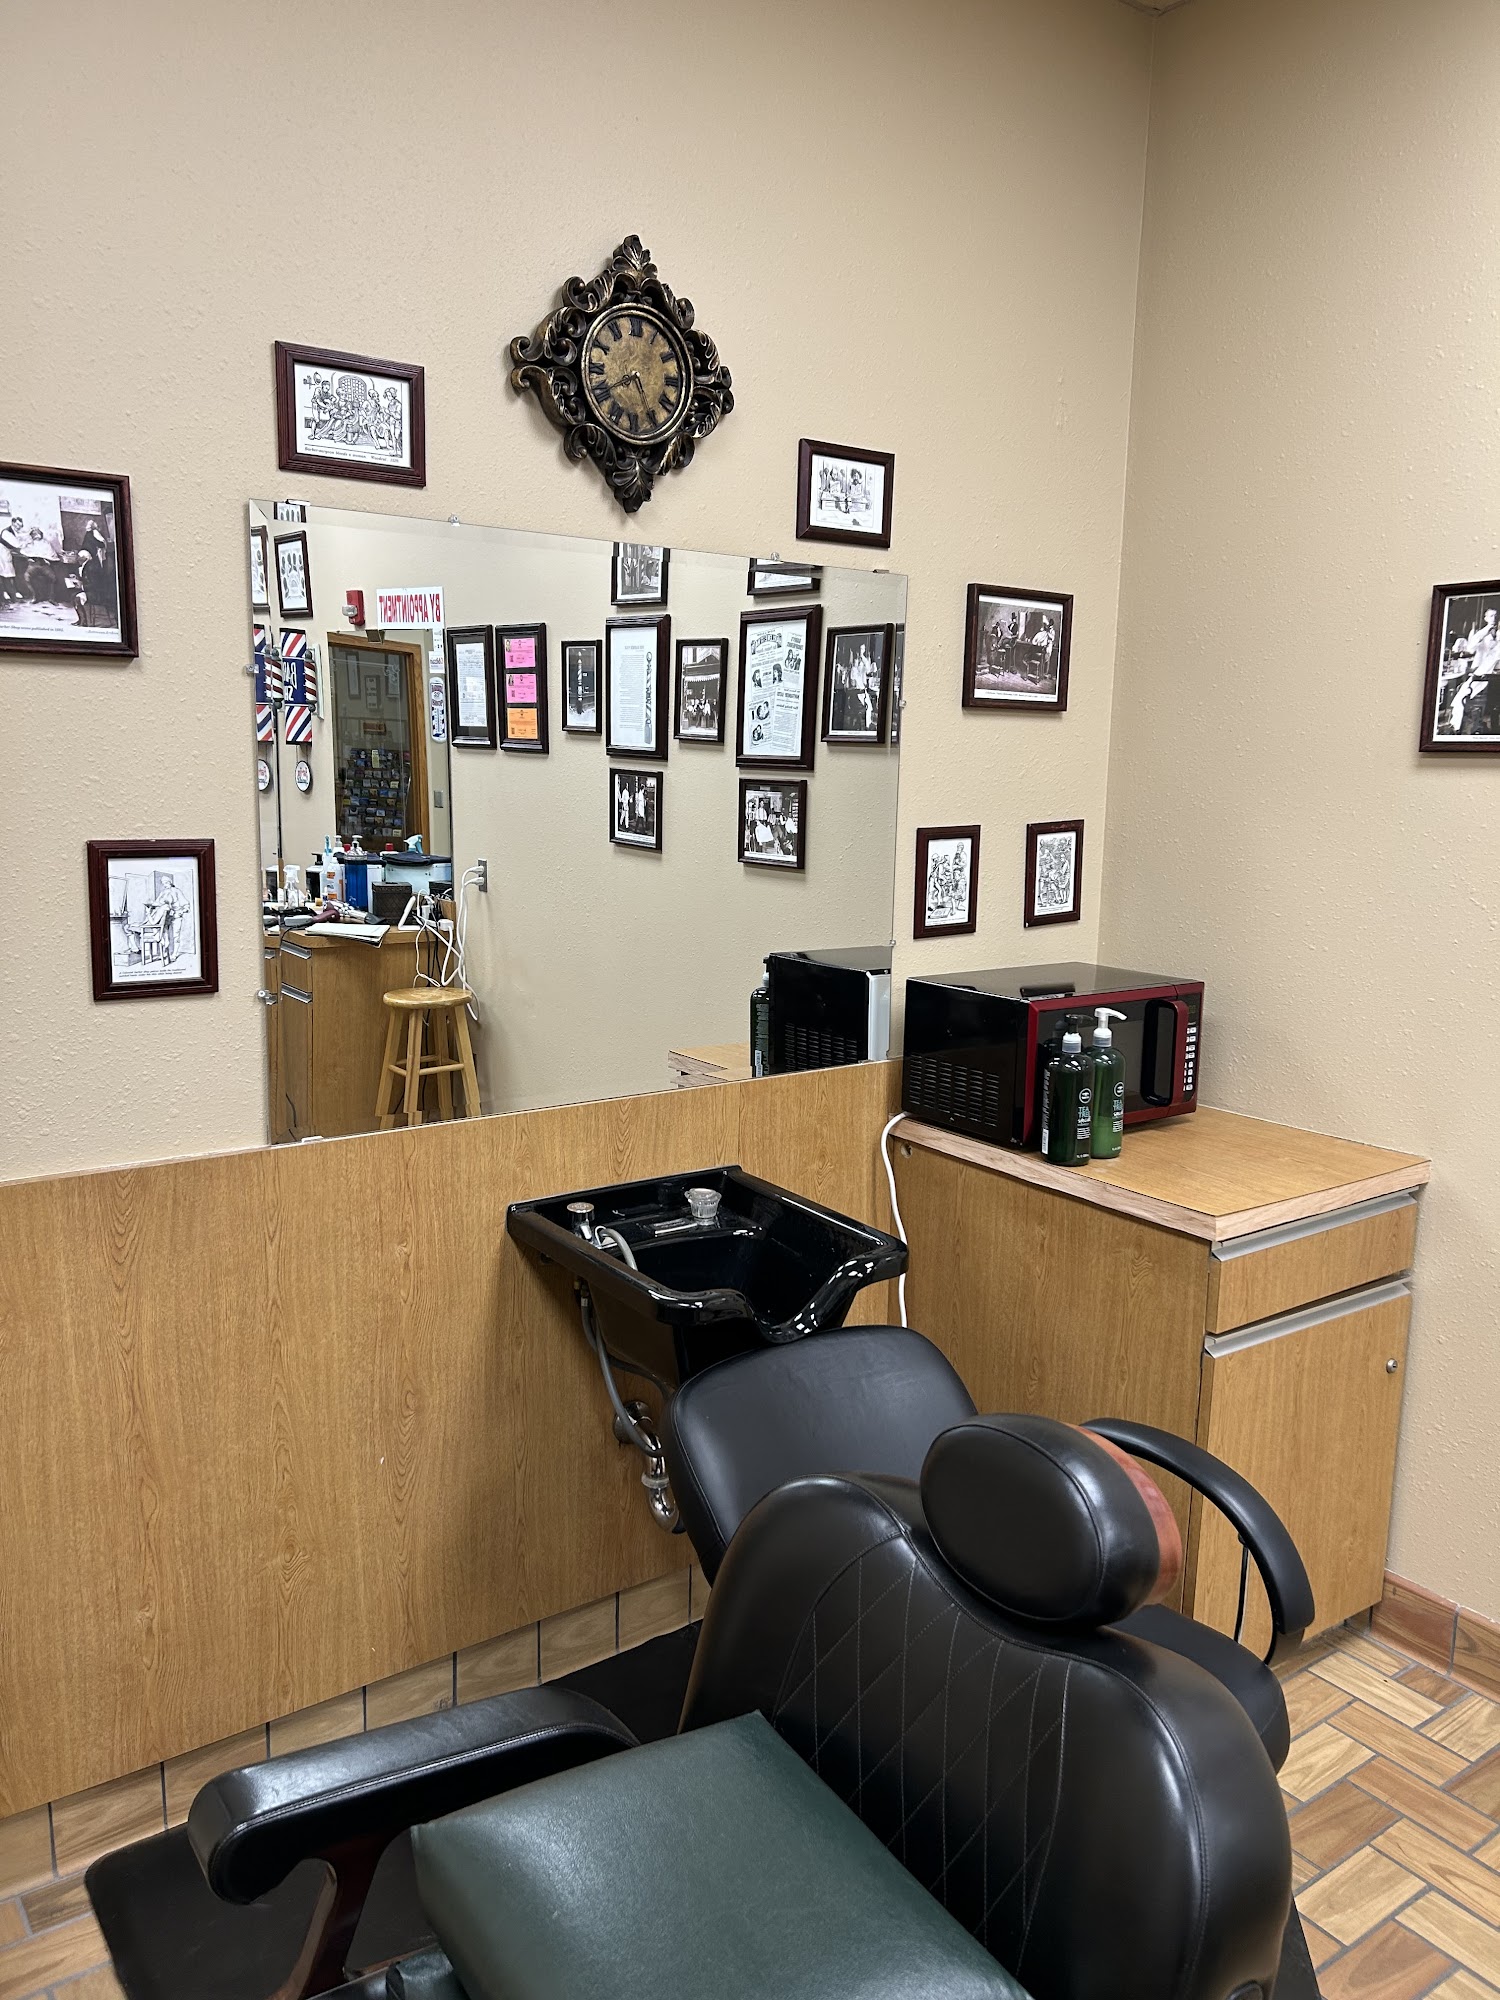 Lott's Barber Shop 554 Glendale Hodgenville Rd W, Glendale Kentucky 42740